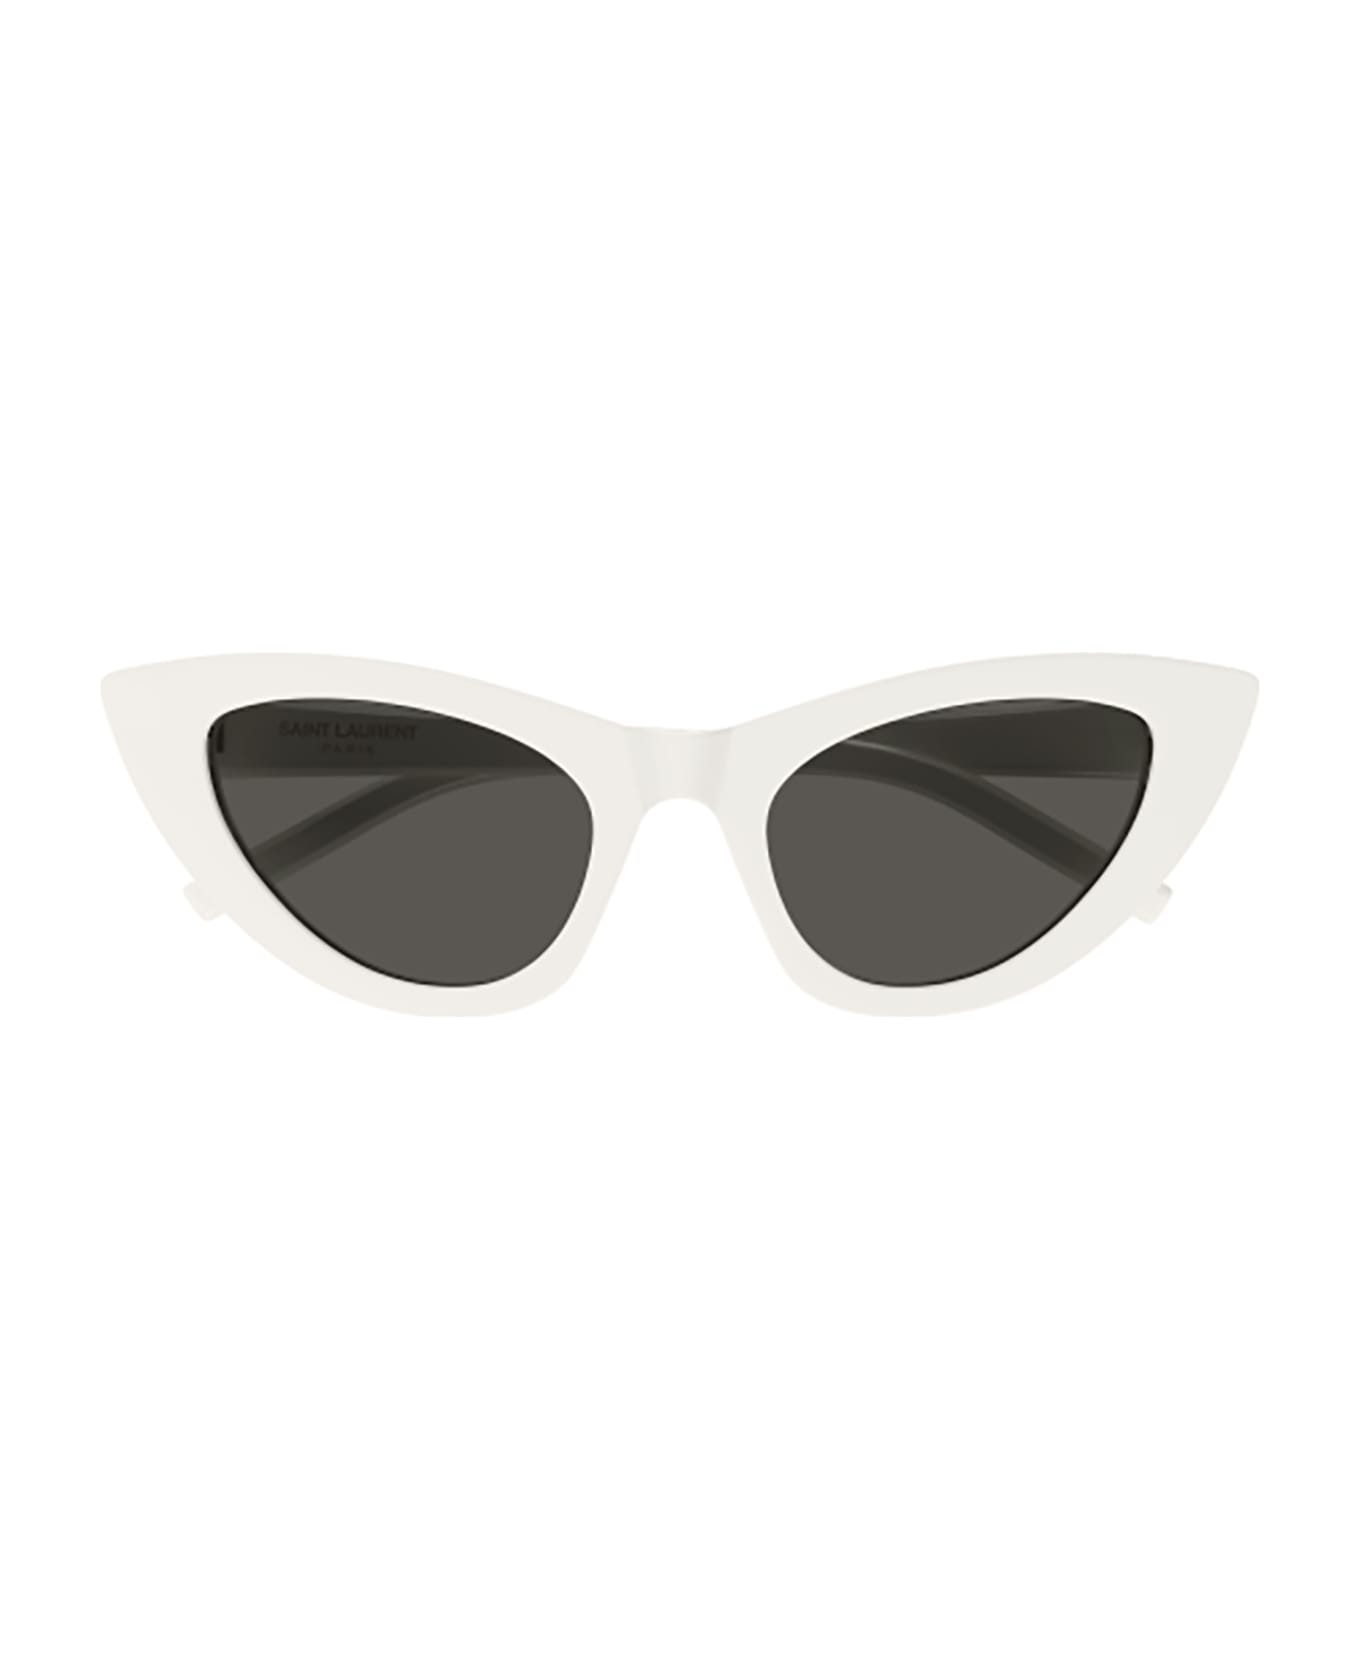 Saint Laurent Eyewear SL 213 LILY Sunglasses - White White Grey